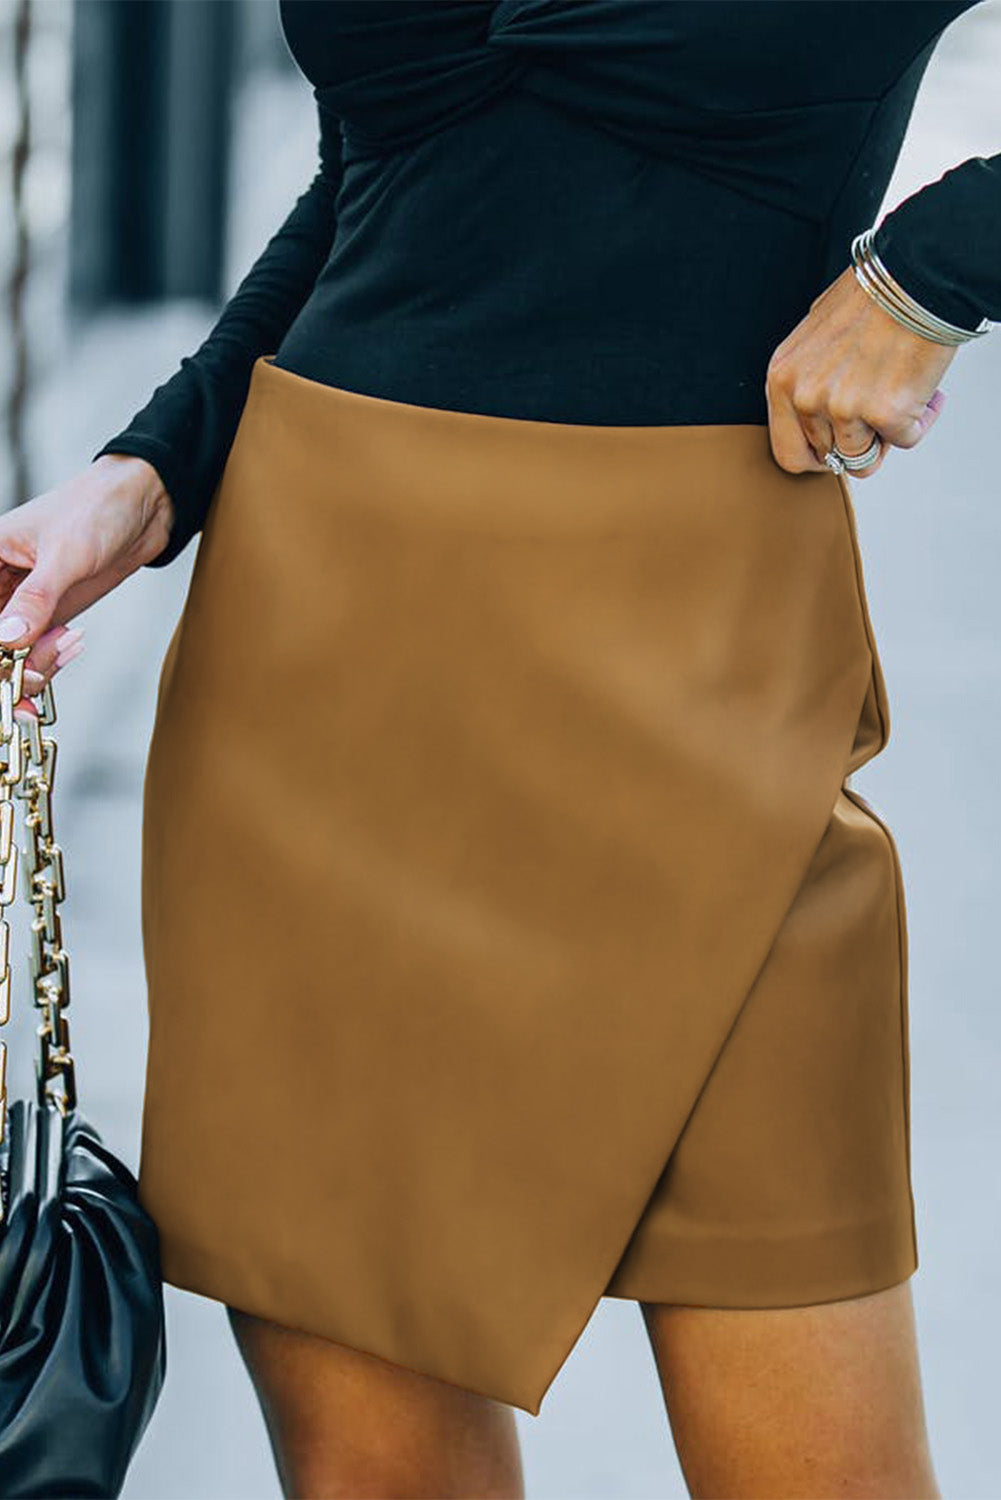 Asymmetrical Faux Leather Mini Skirt